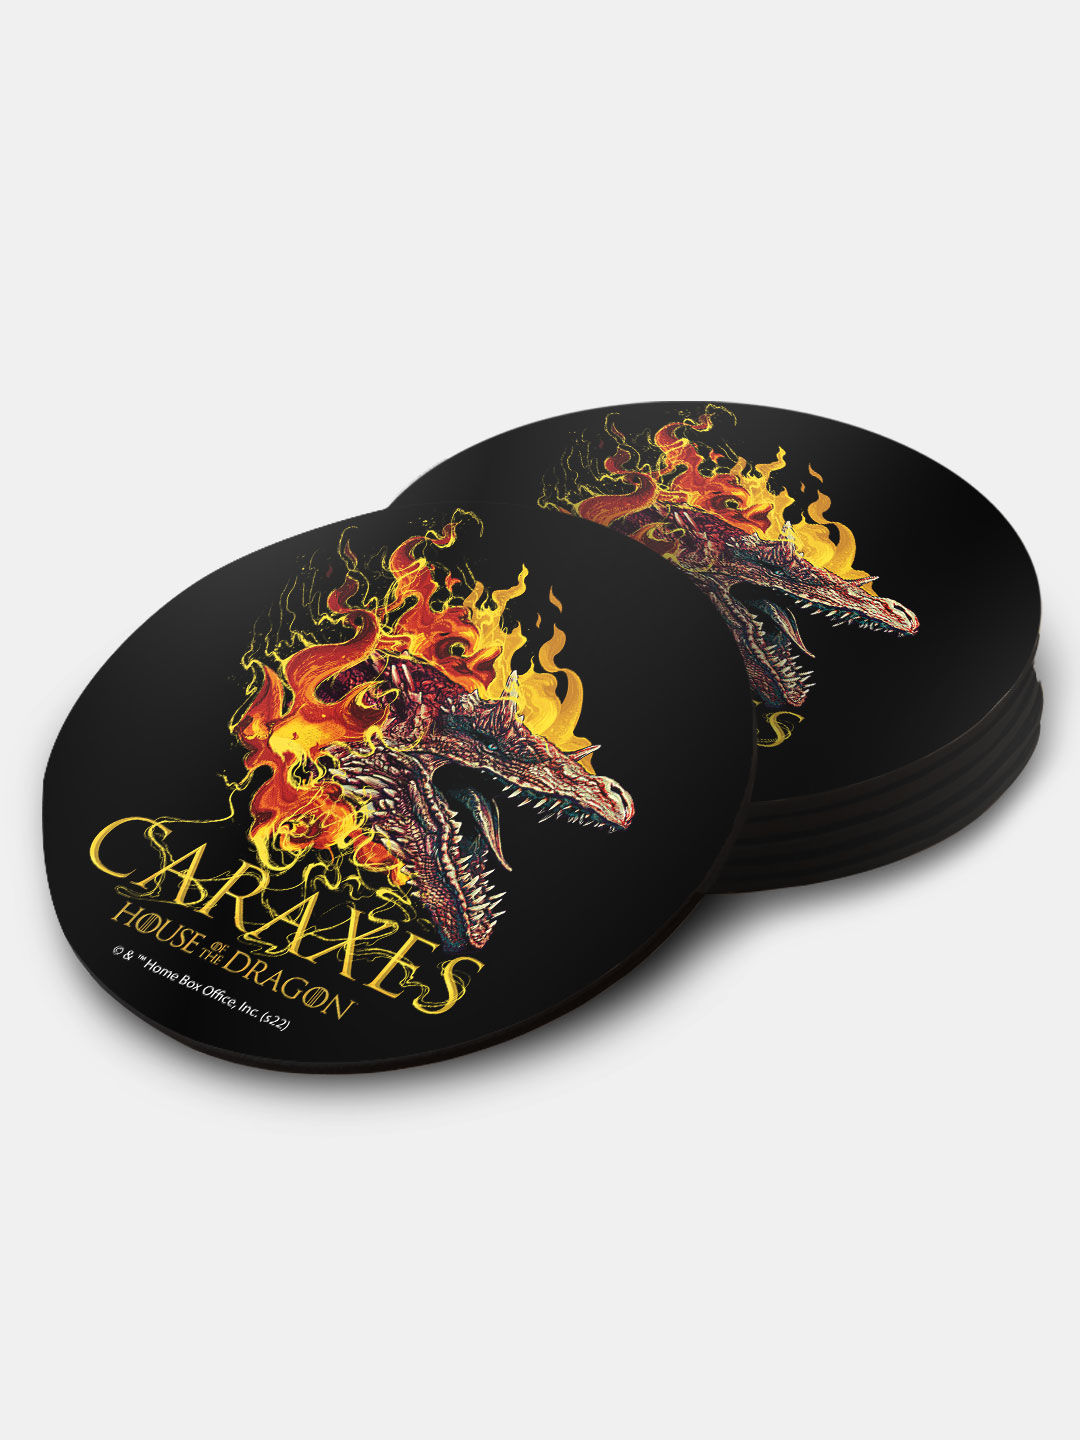 Buy HOD Caraxes Fire - Circular Coasters Coasters Online